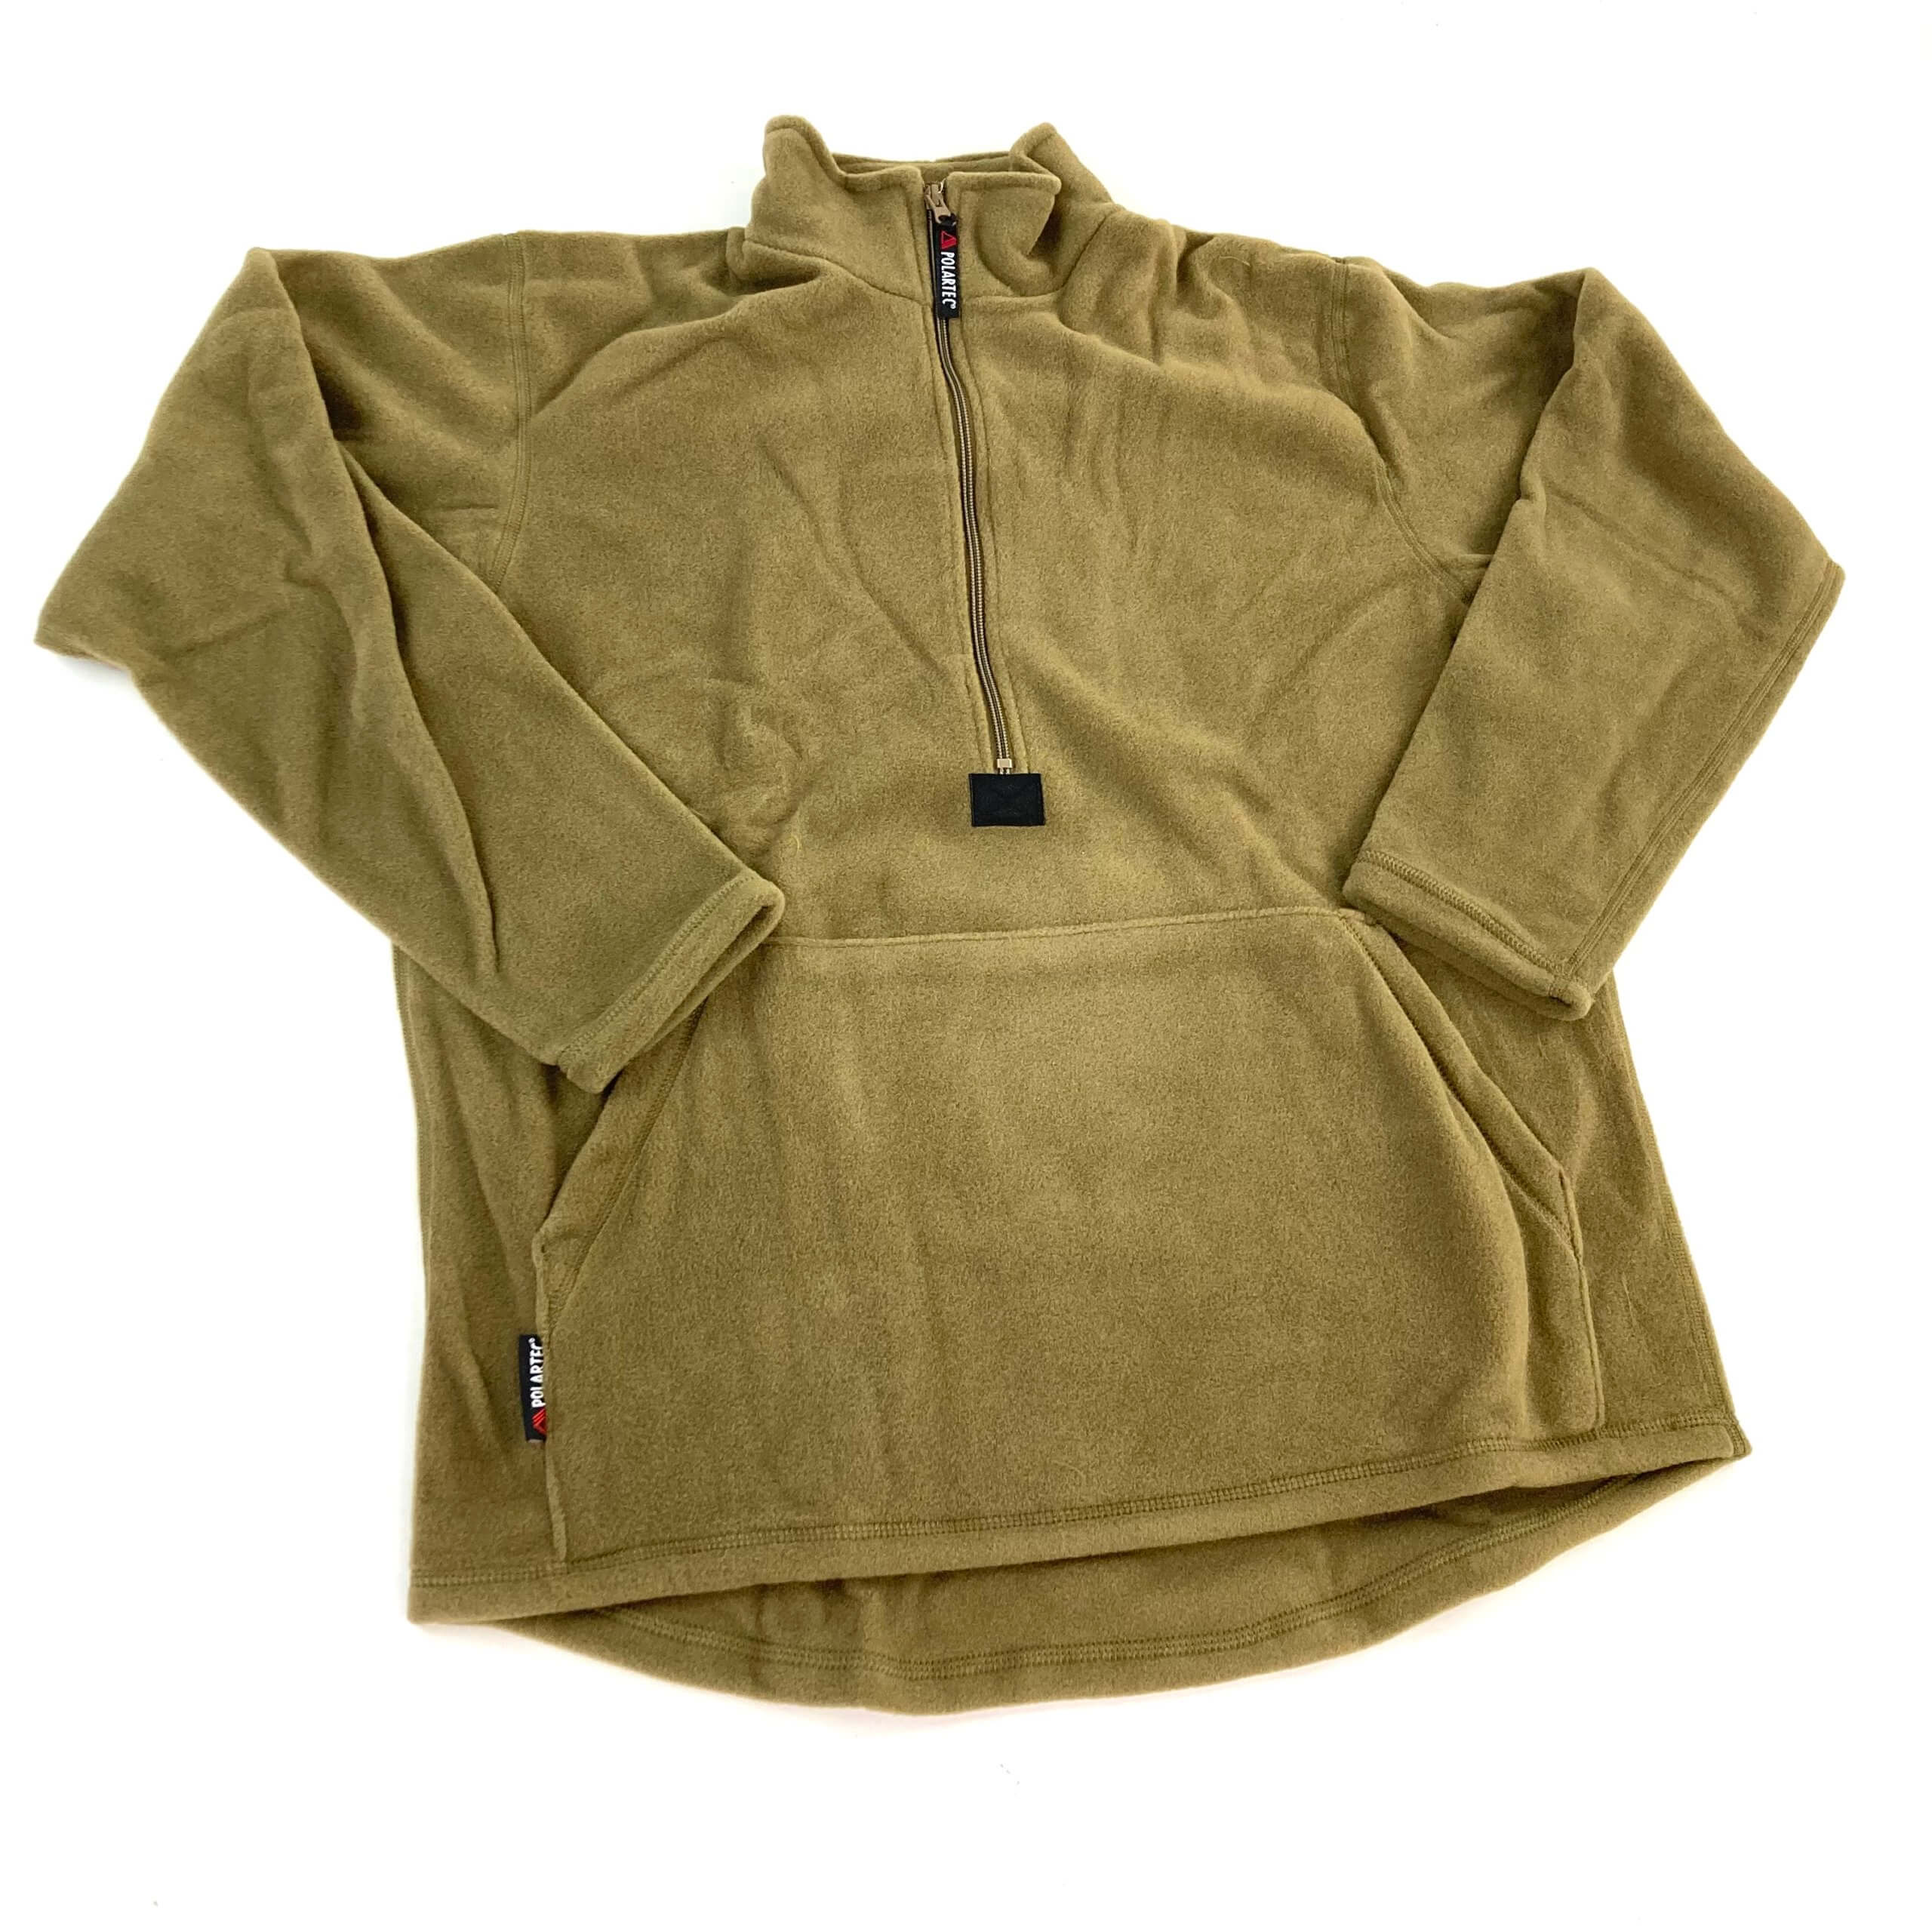 Military Fleece Jacket PolarTec Medium Reg Peckham USA Genuine Flaw 